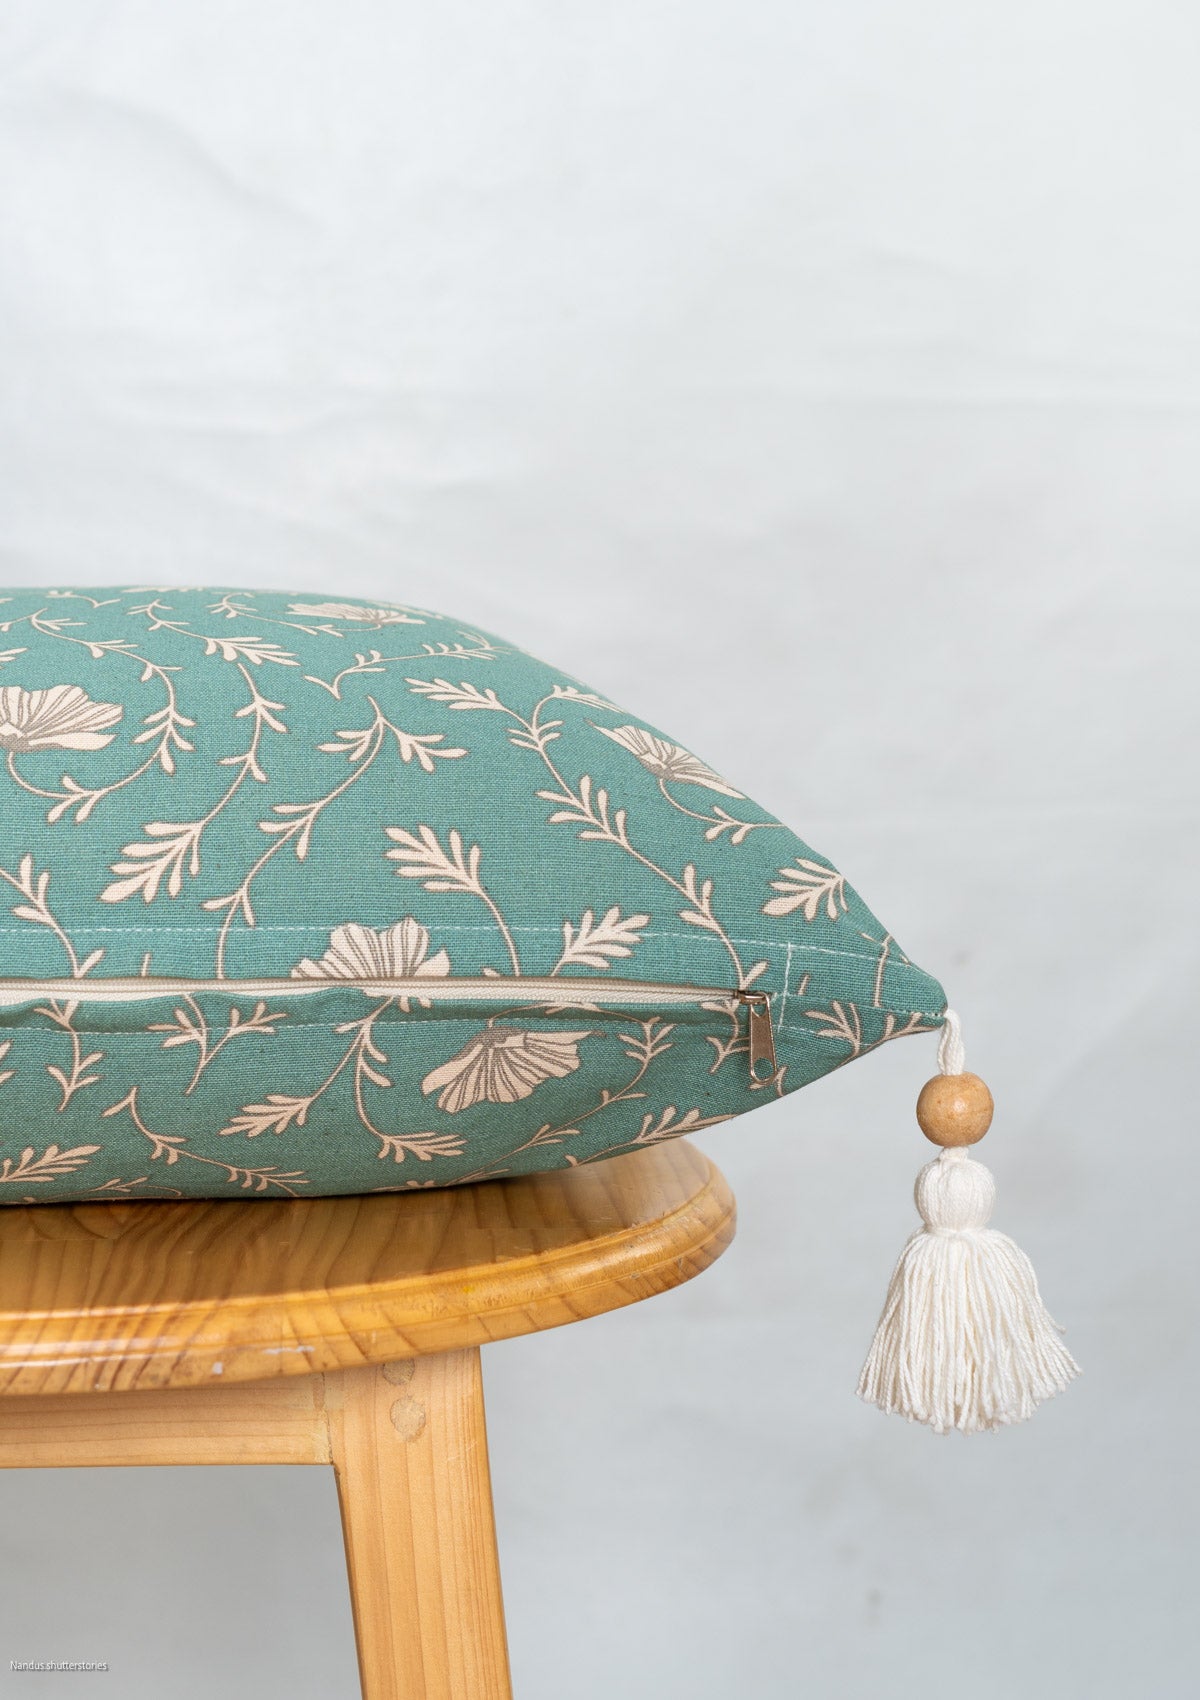 Eden 100% cotton customizable floral cushion cover for sofa - Aqua blue